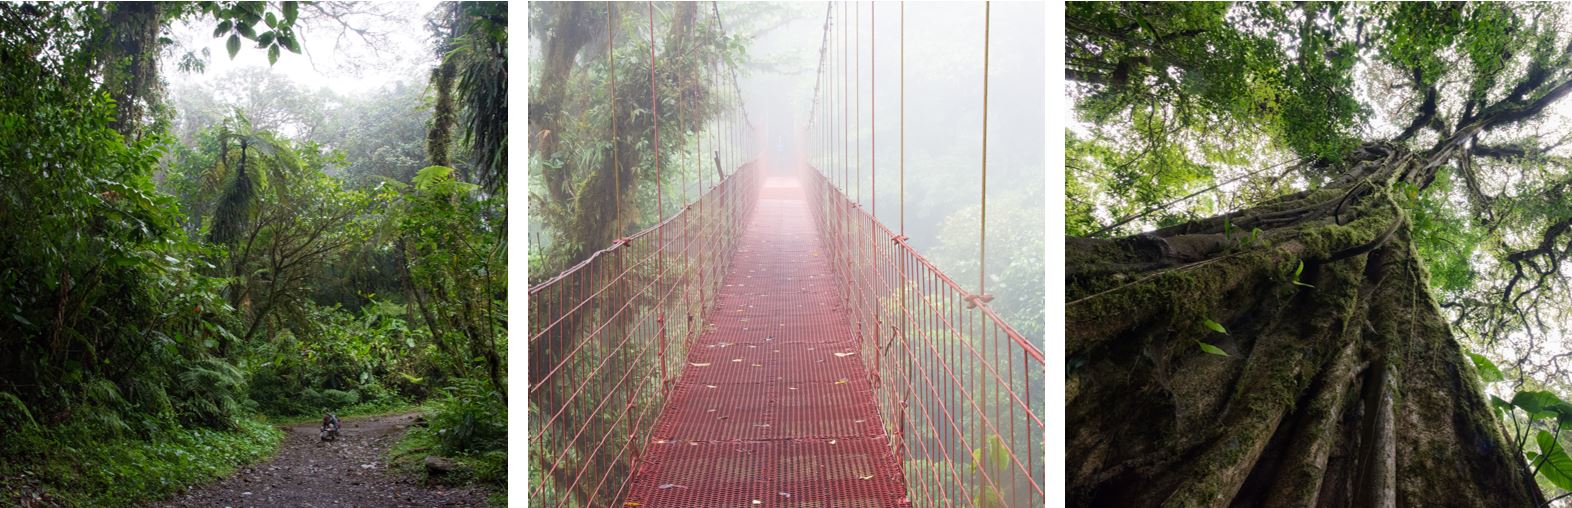 Forêt de nuage de Monteverde, Costa Rica